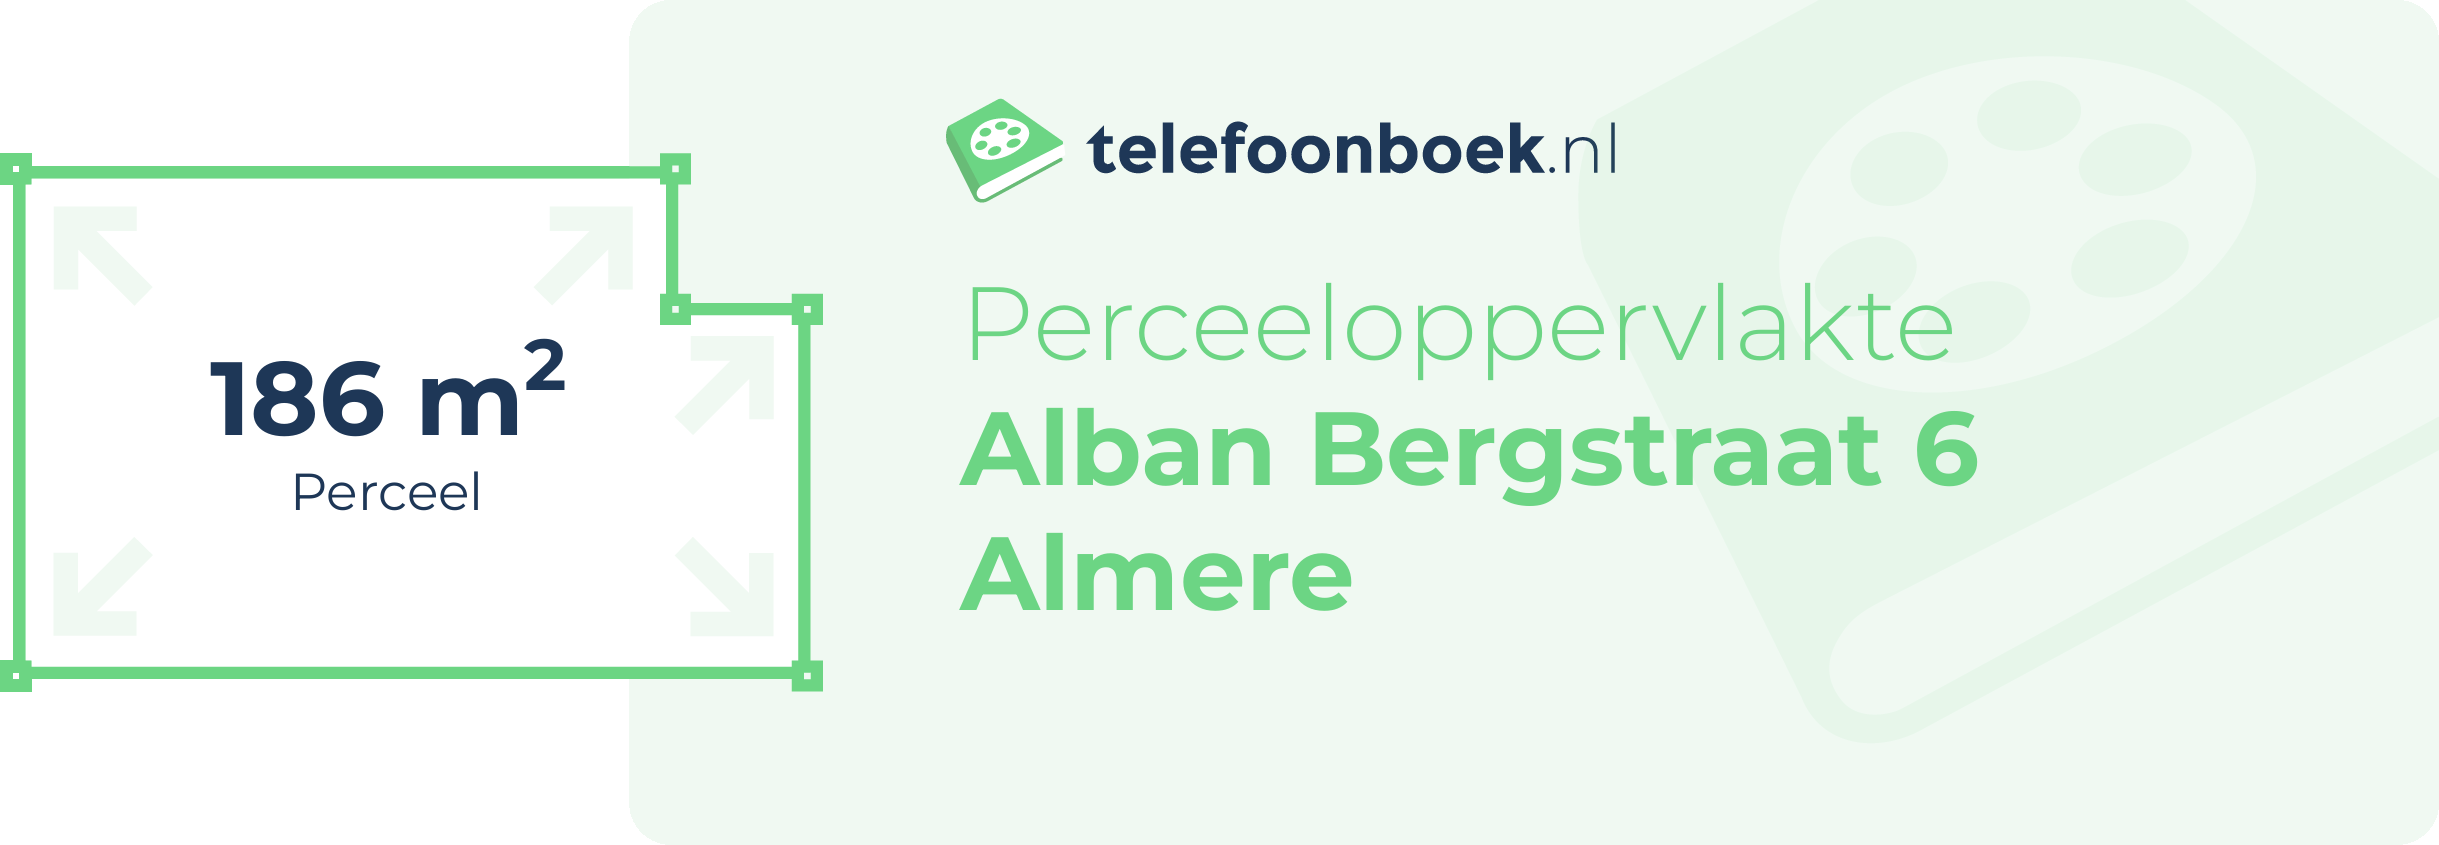 Perceeloppervlakte Alban Bergstraat 6 Almere